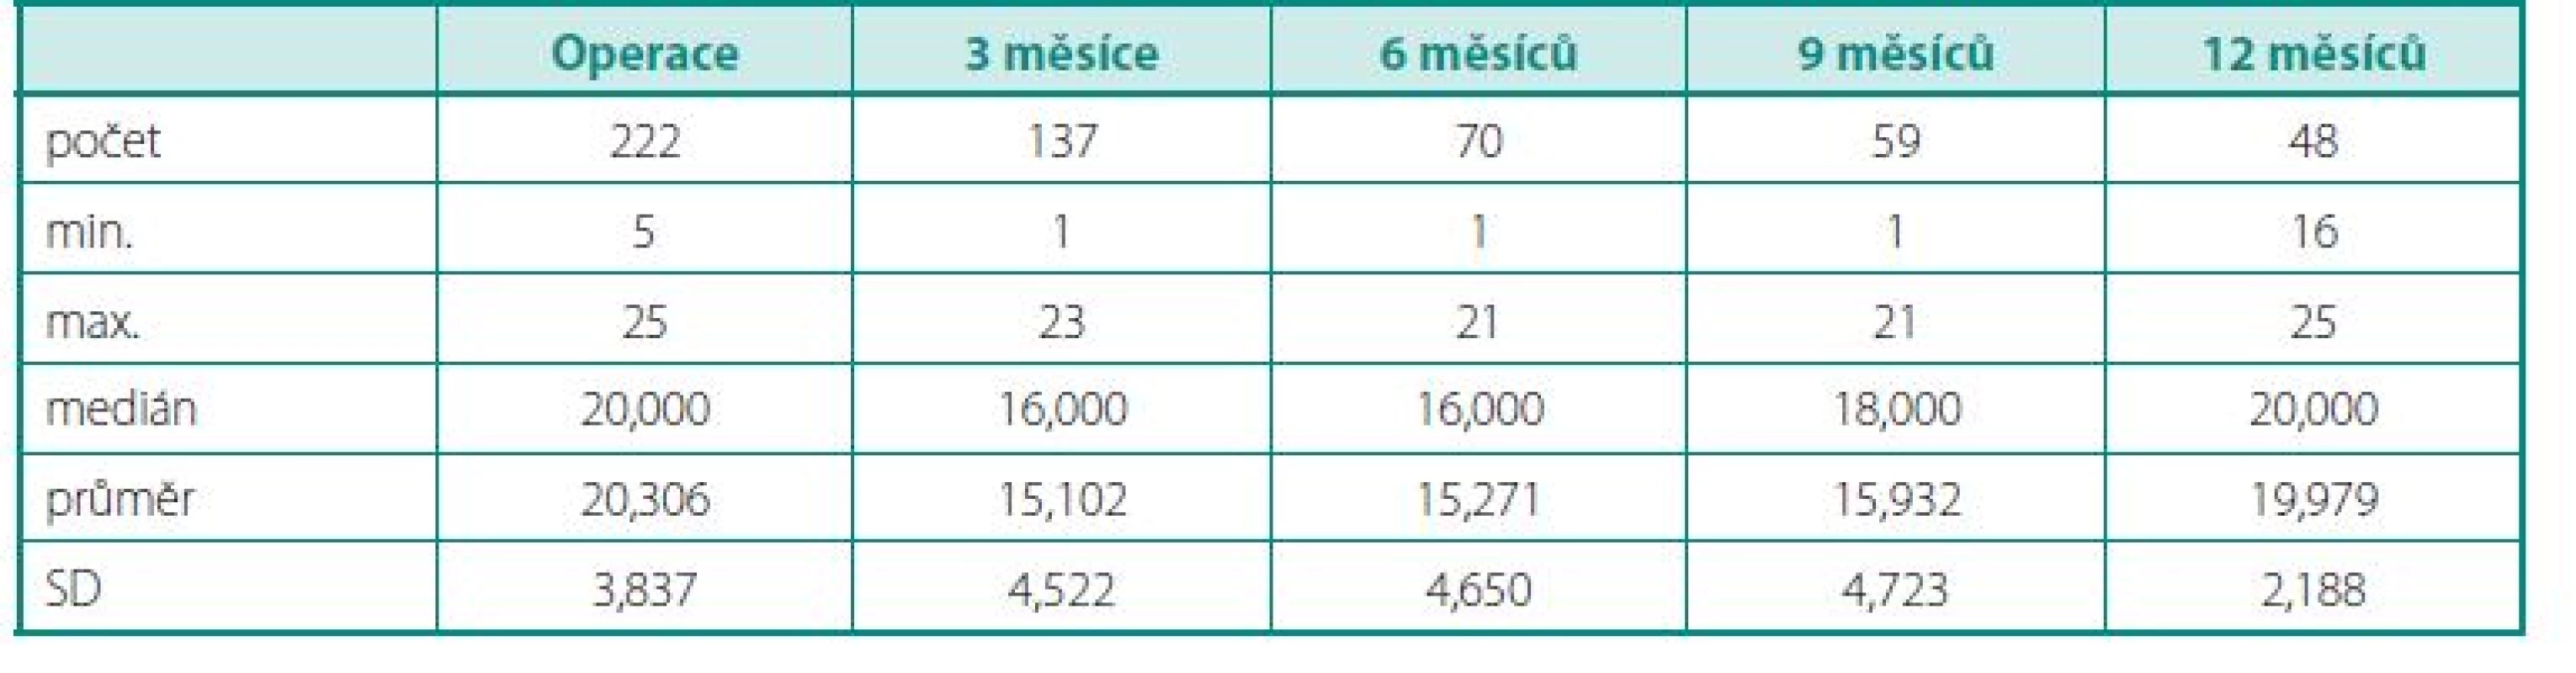 Počet vyplněných dotazníků v jednotlivých obdobích a průměrné IIEF-5 skóre
Table 9. Number of completed questionnaires in each period and the mean IIEF-5 score